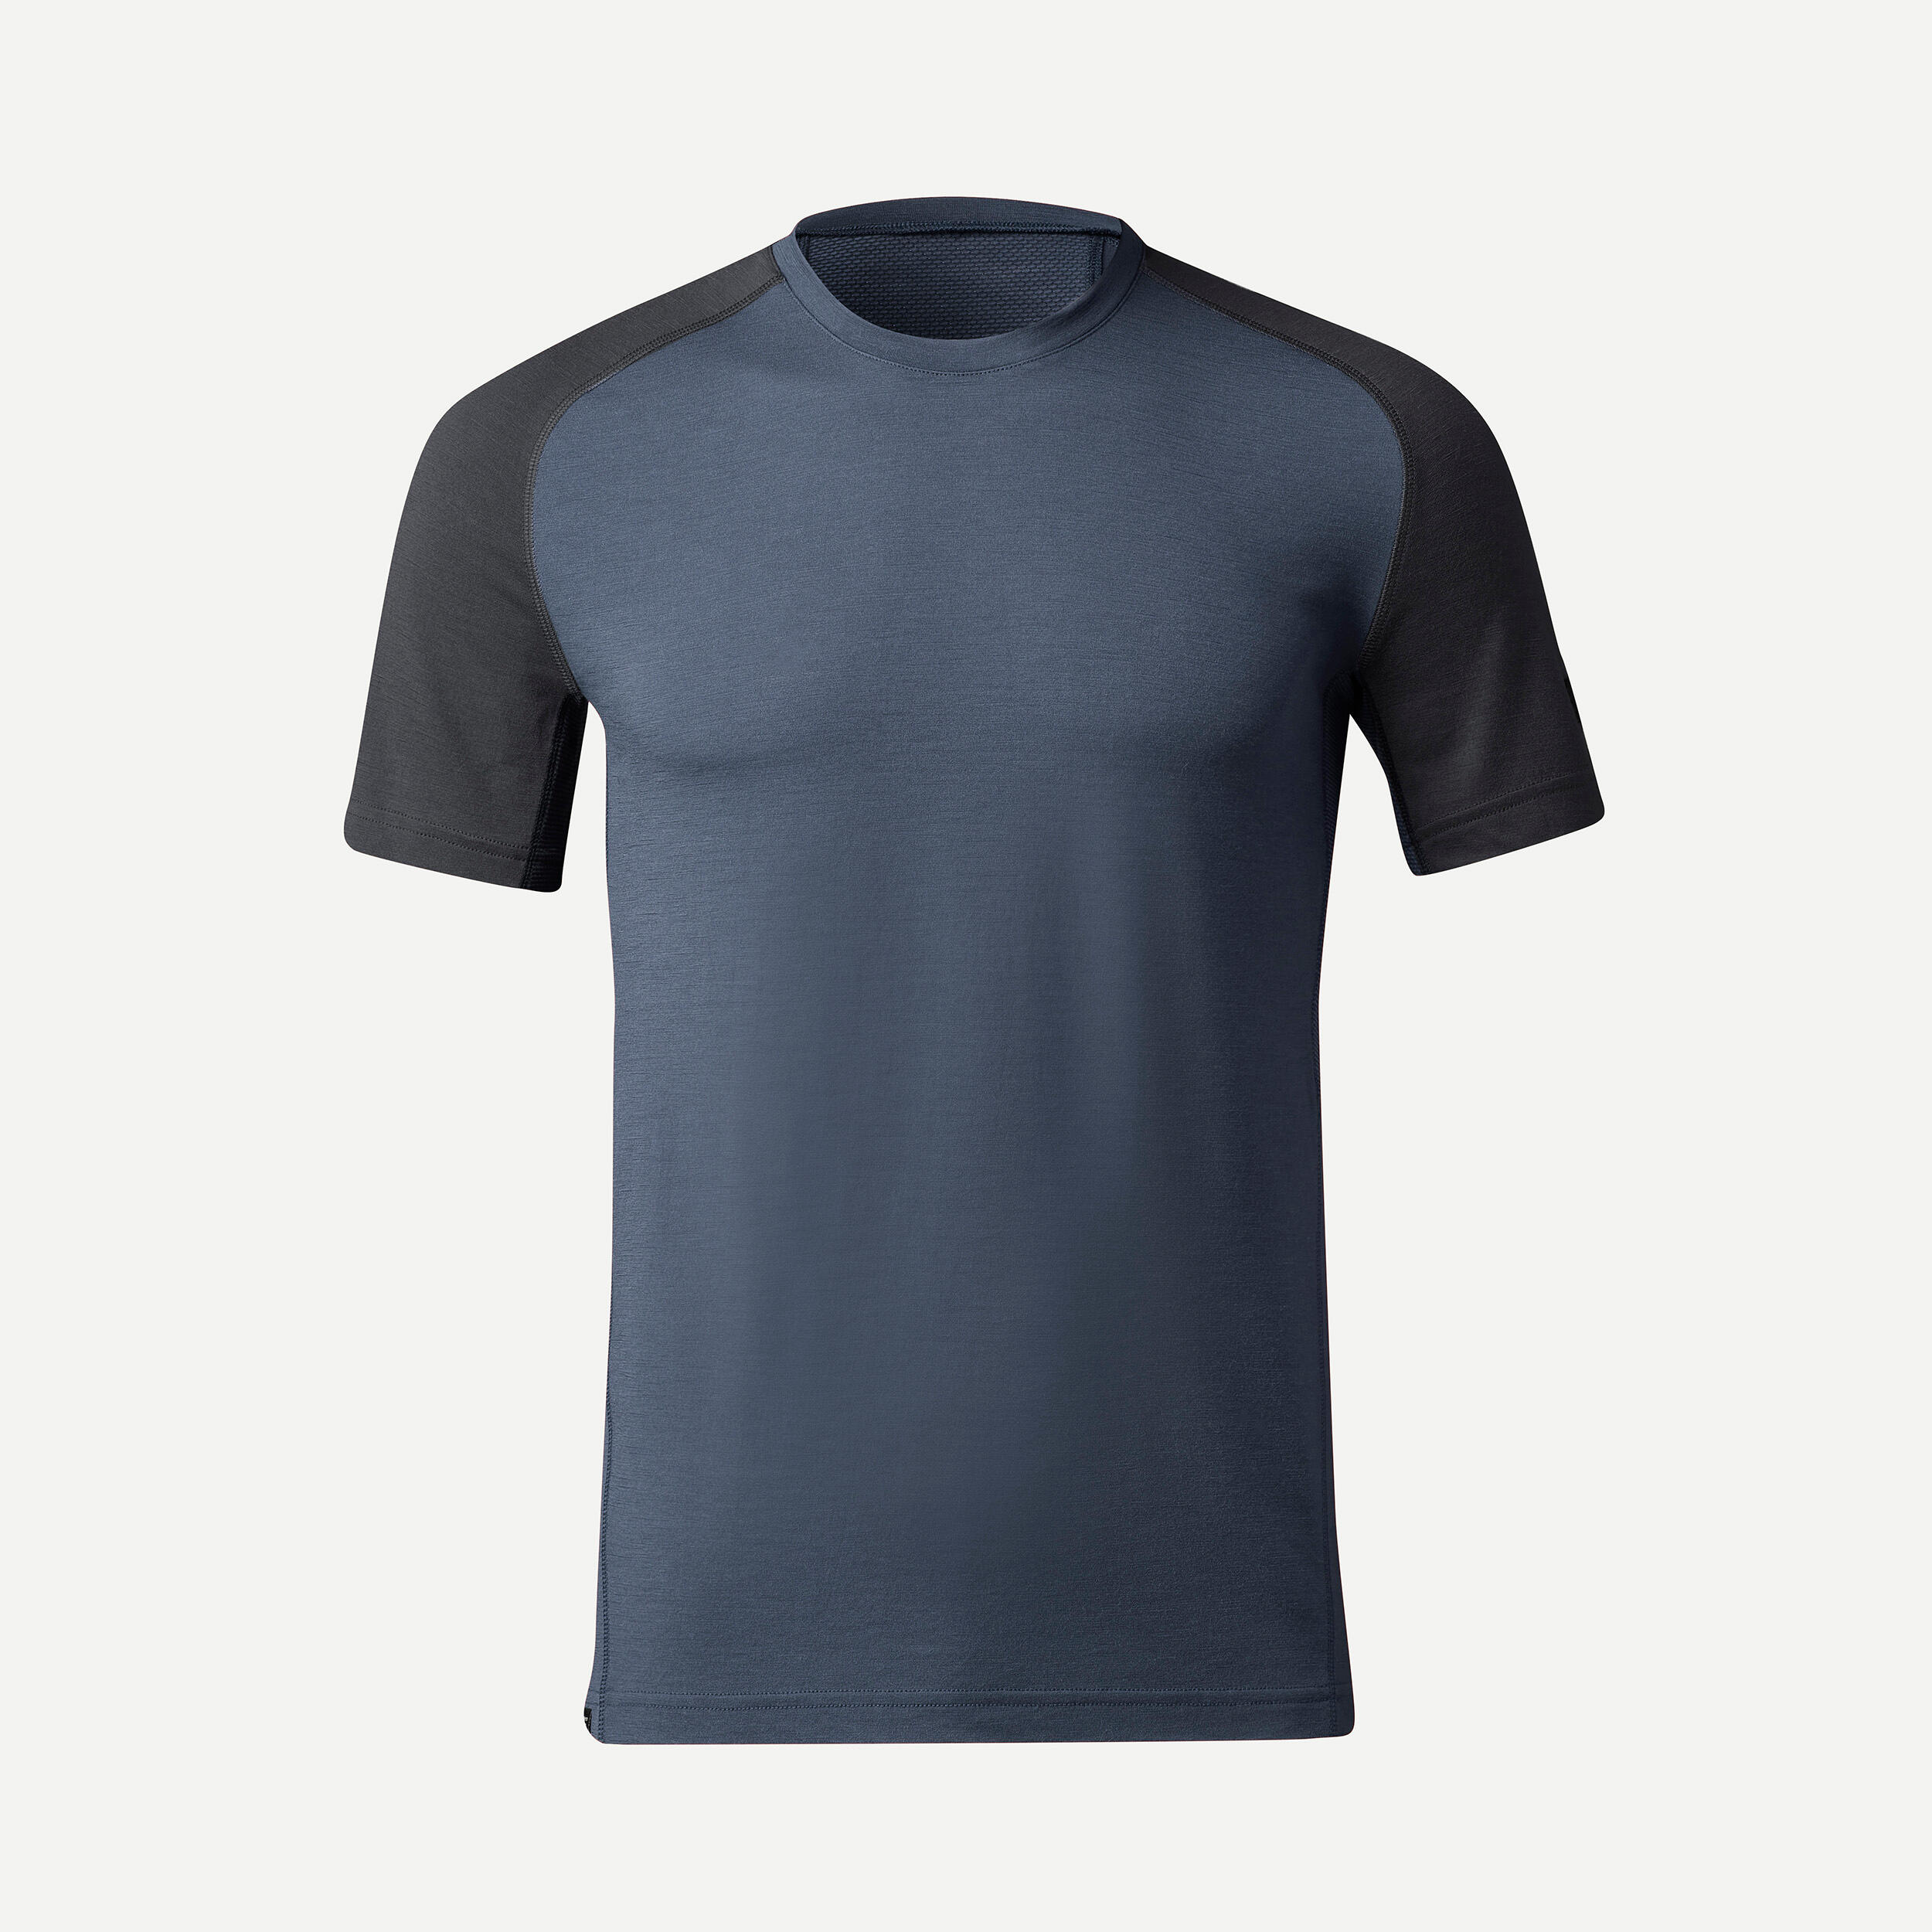 Decathlon | T-shirt lana merinos trekking uomo MT500 WOOL grigia |  Forclaz